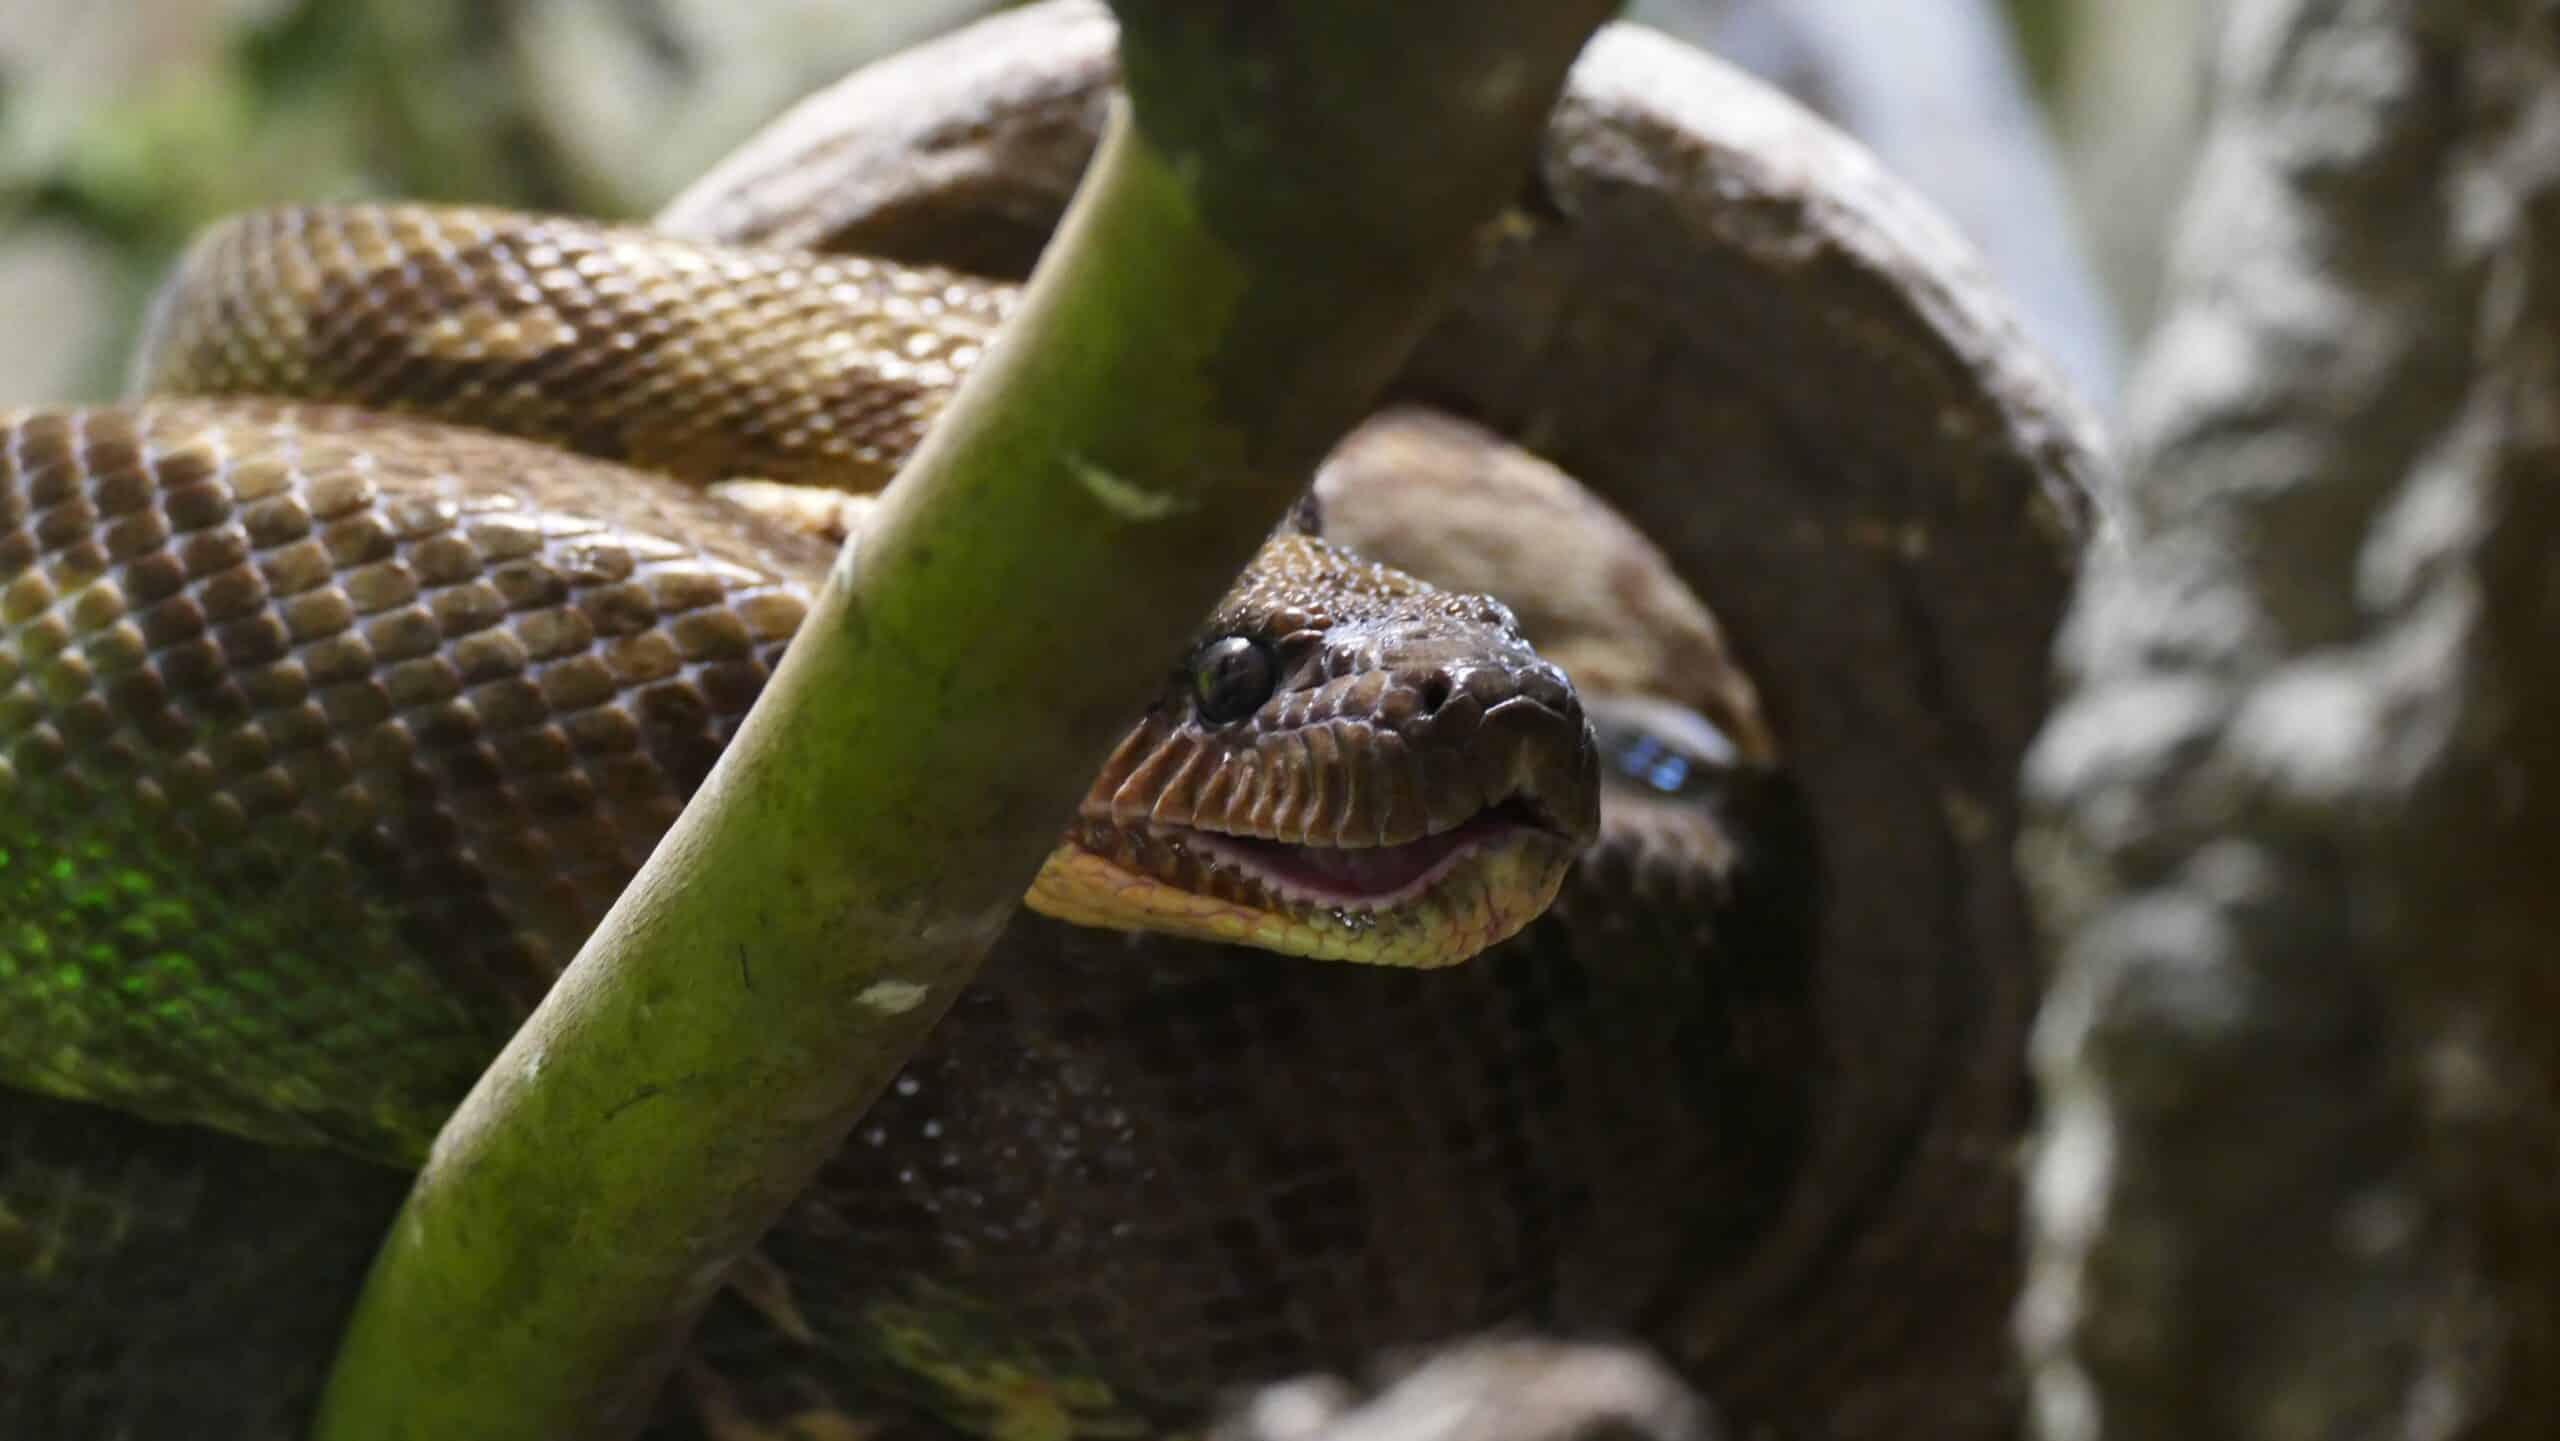 Can snakes climb trees?